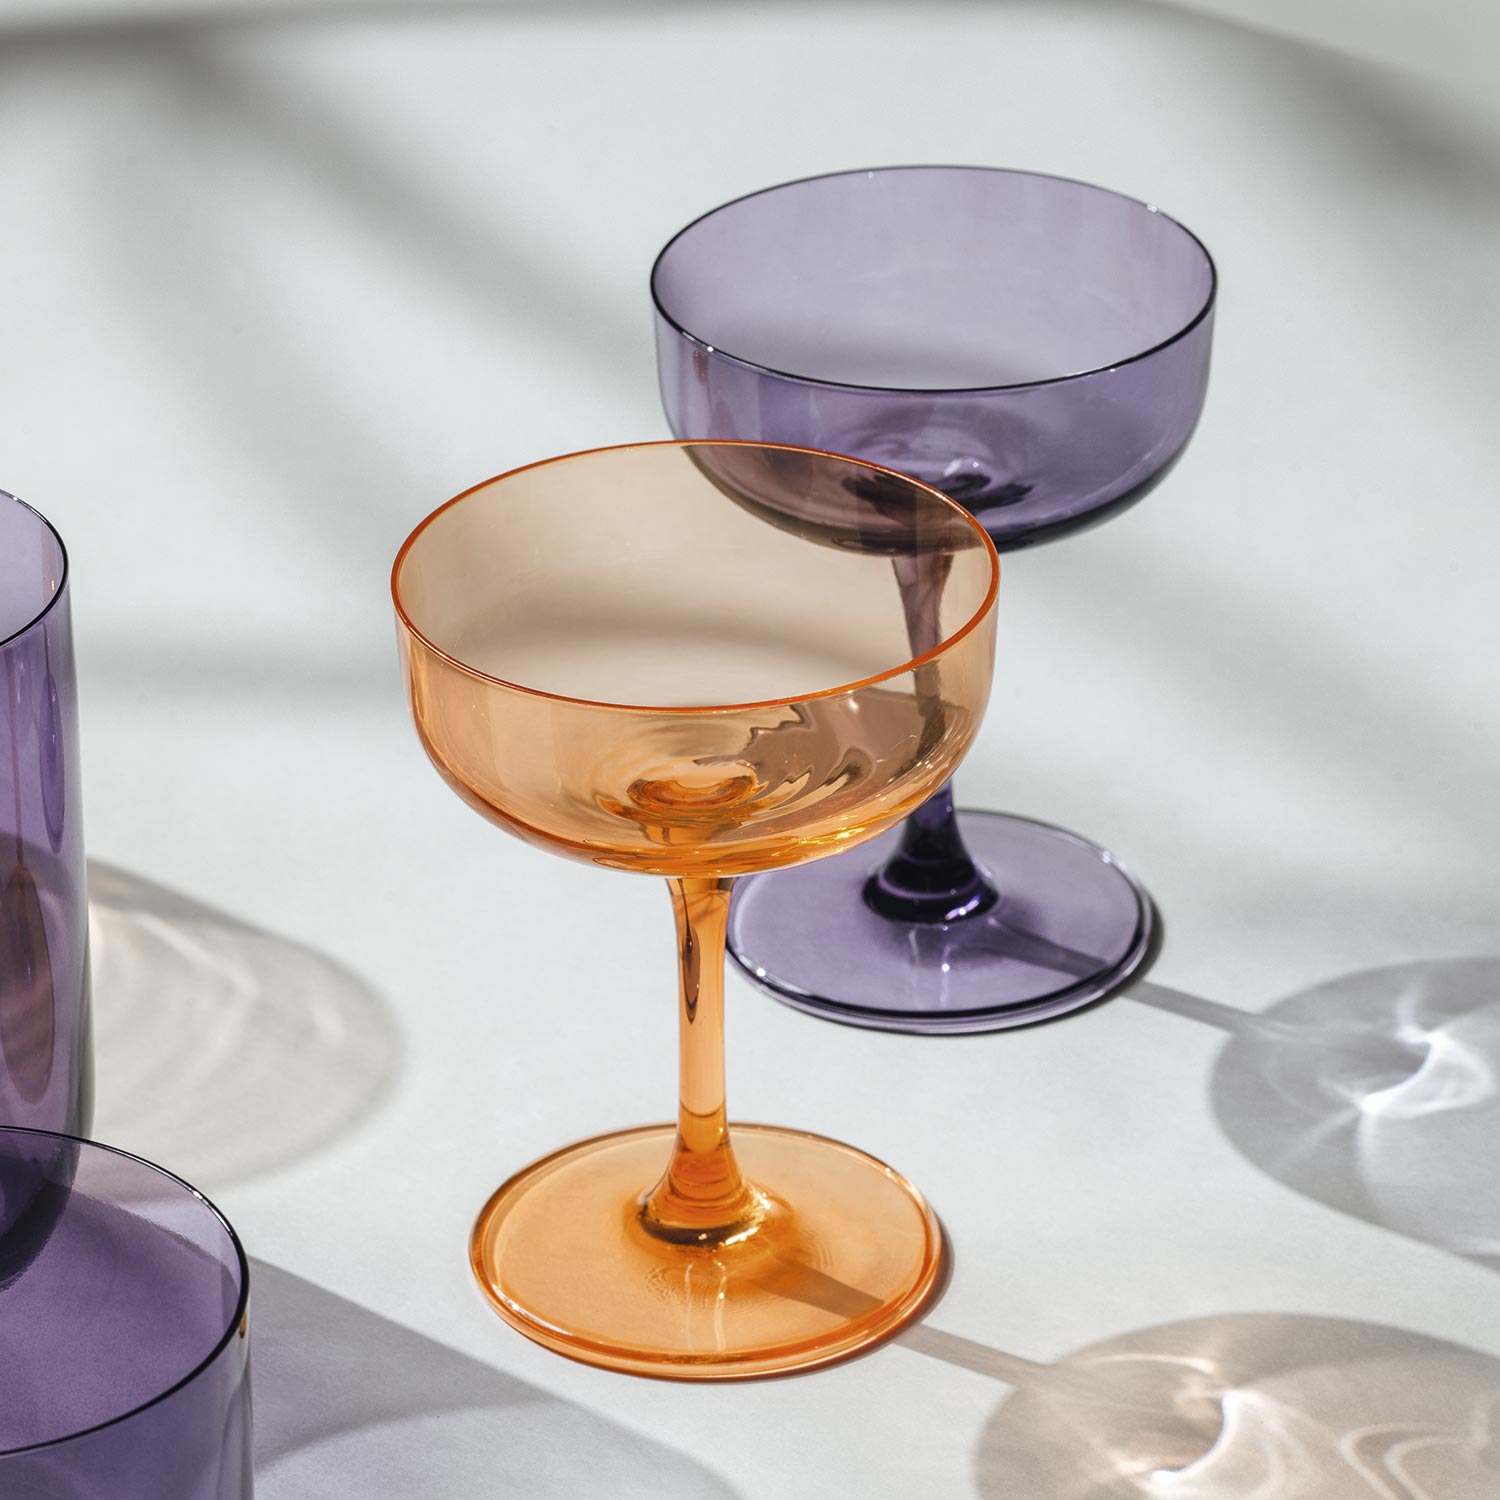 Like Lavender Набор бокалов для шампанского 100 мл, 2 шт Villeroy & Boch
https://spb.v-b.ru
г.Санкт-Петербург
eshop@v-b.spb.ru
+7(812)3801977